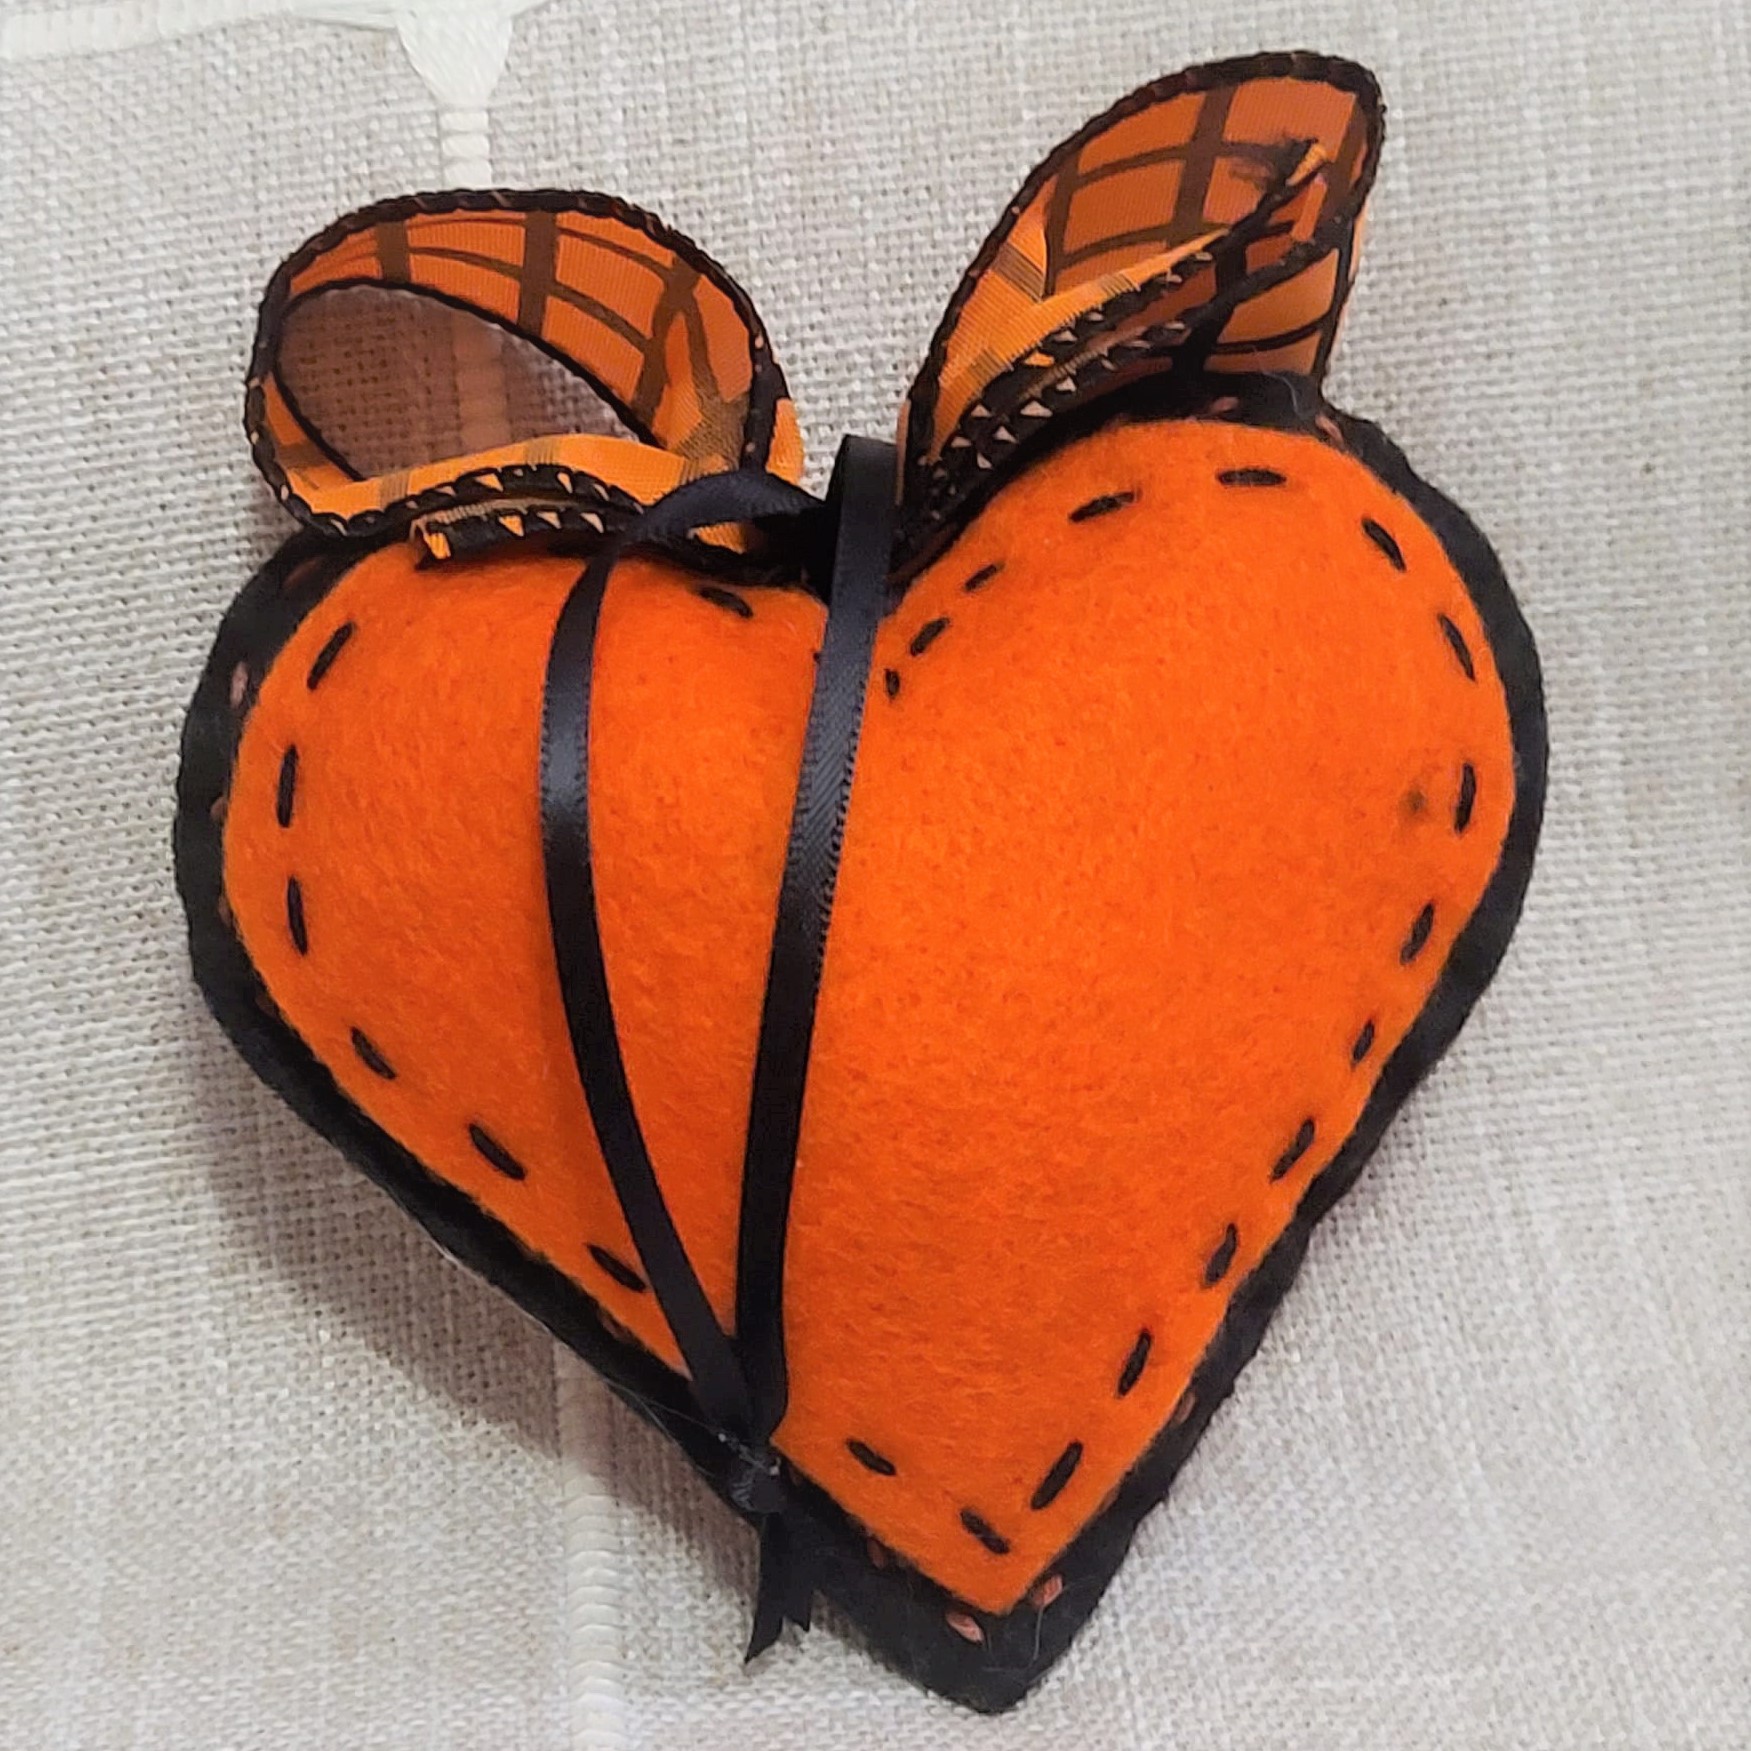 Halloween felt heart in stitches ornament 2 sided orange black